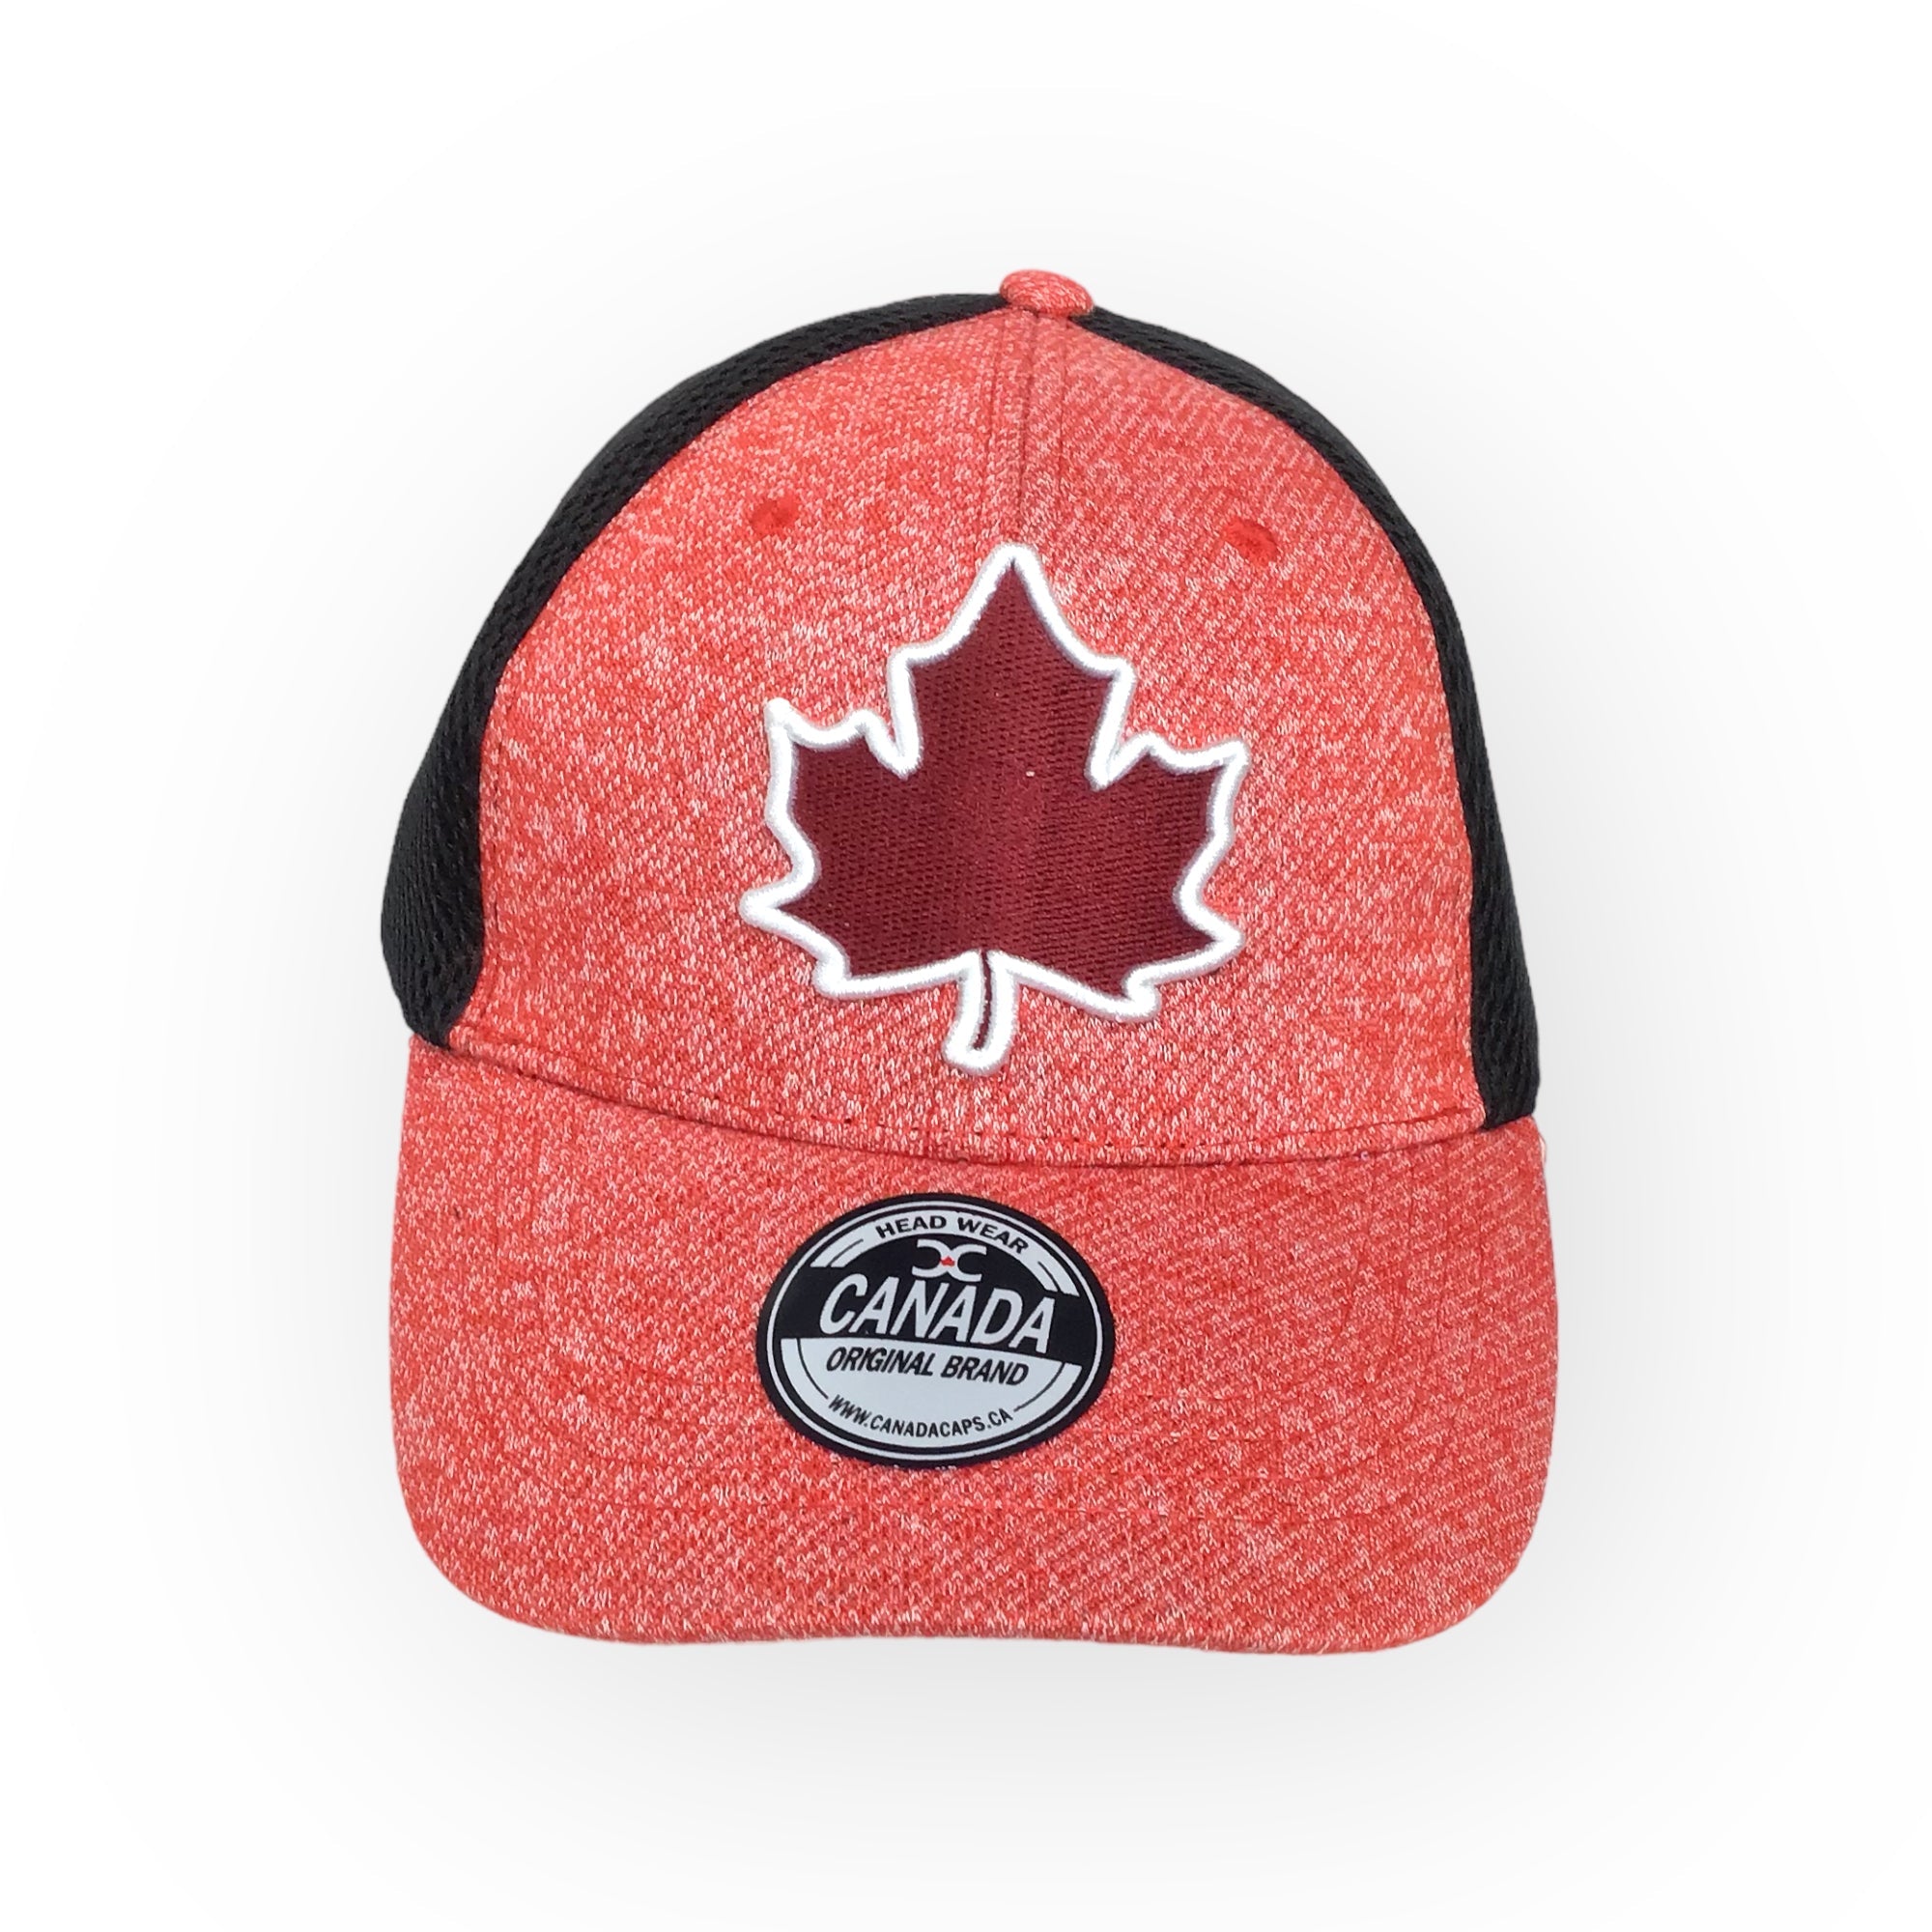 Baseball Cap Red Maple Leaf Original Adjustable Mesh Hat